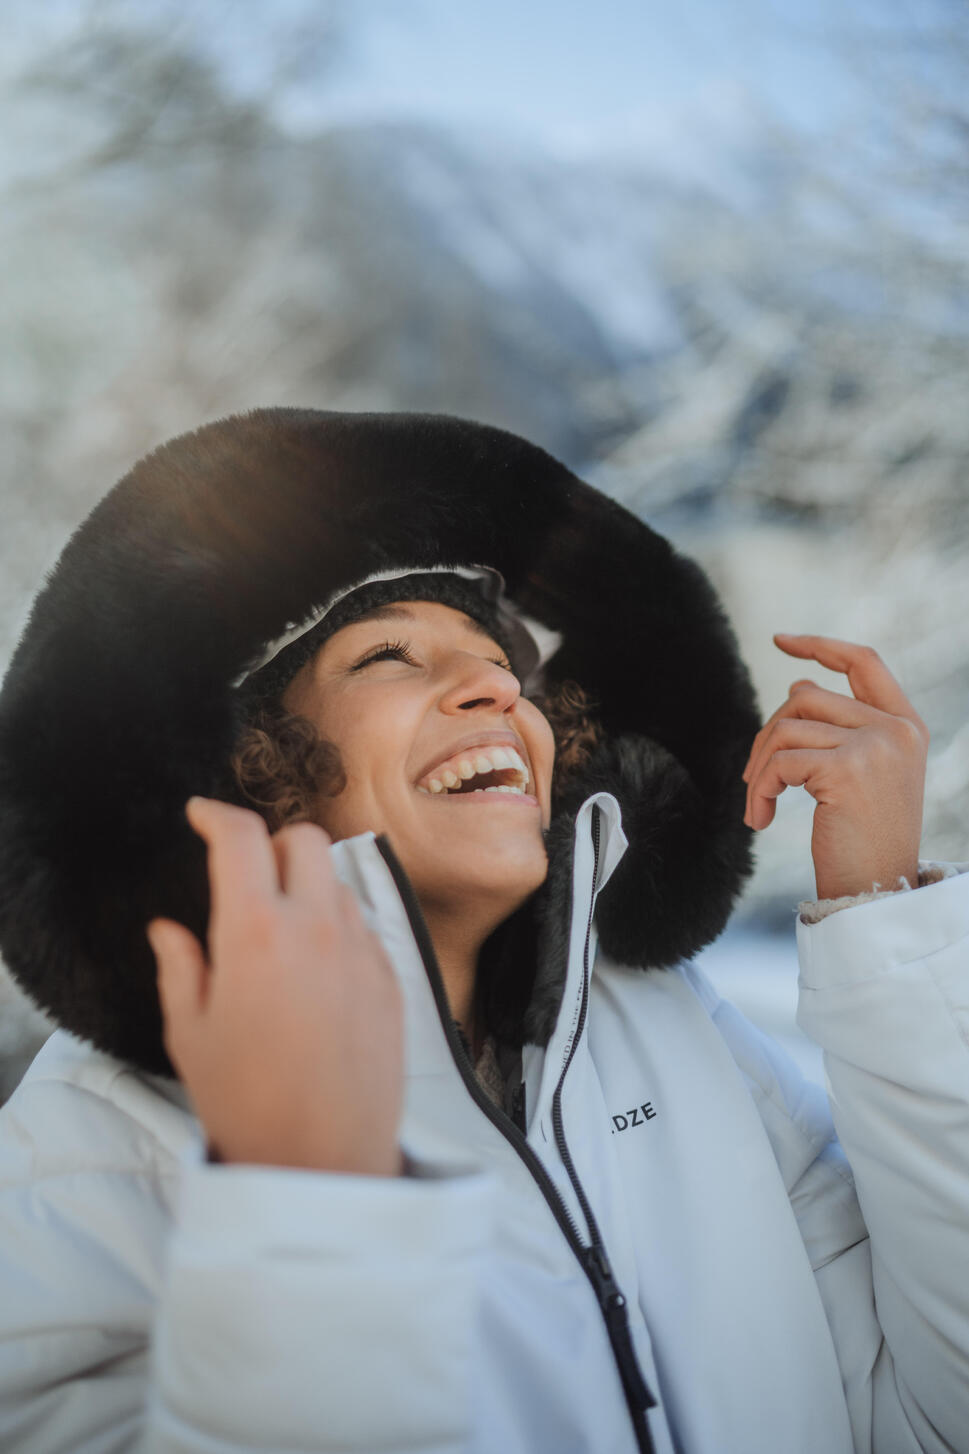 Refurbished Womens Mid-Length Warm Ski Jacket 100 - B Grade 5/7